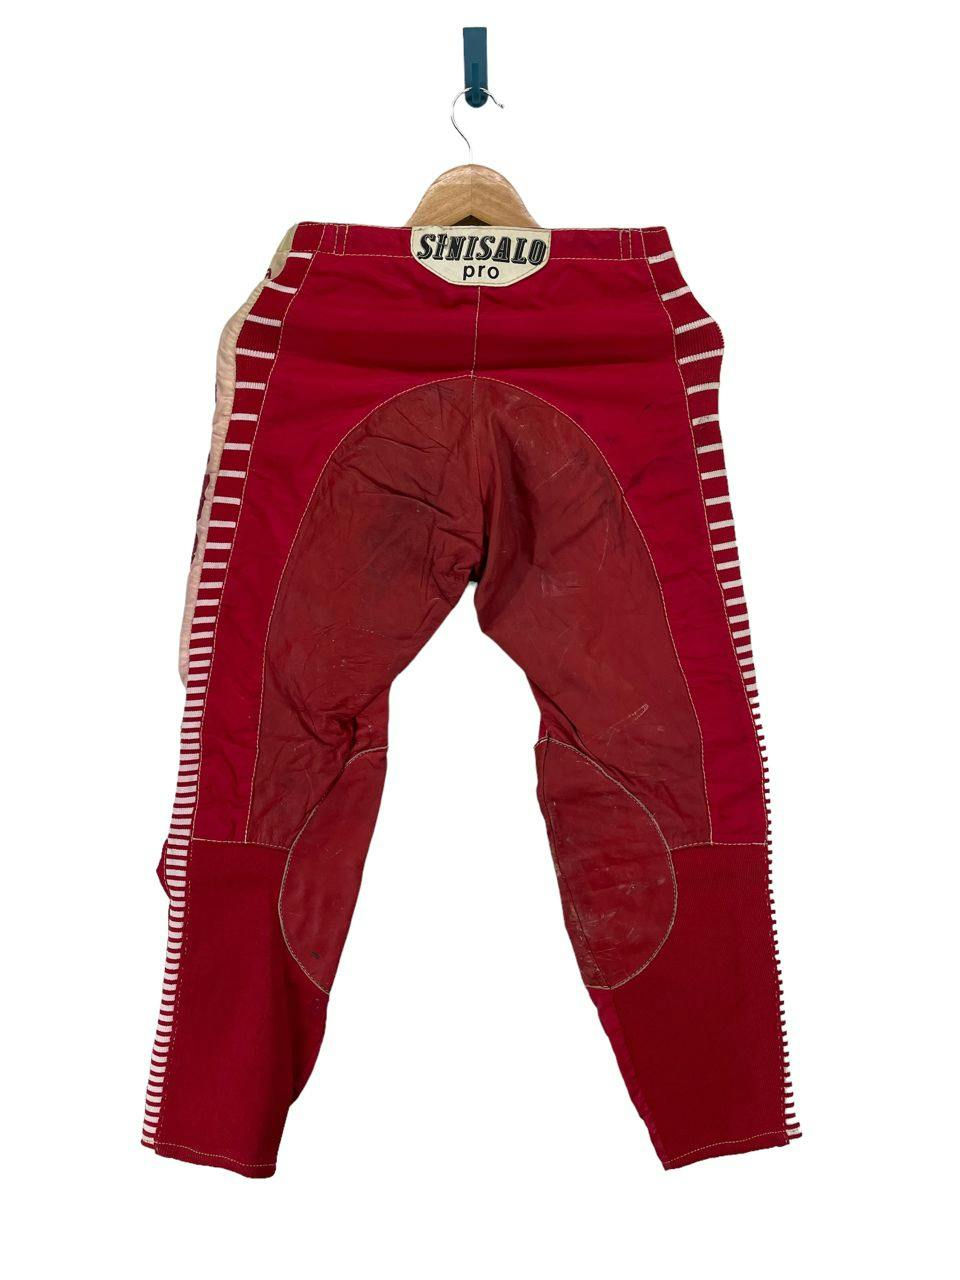 Vintage🔥 Sinisalo Motorcross Original Pant With Leather Pad - 13